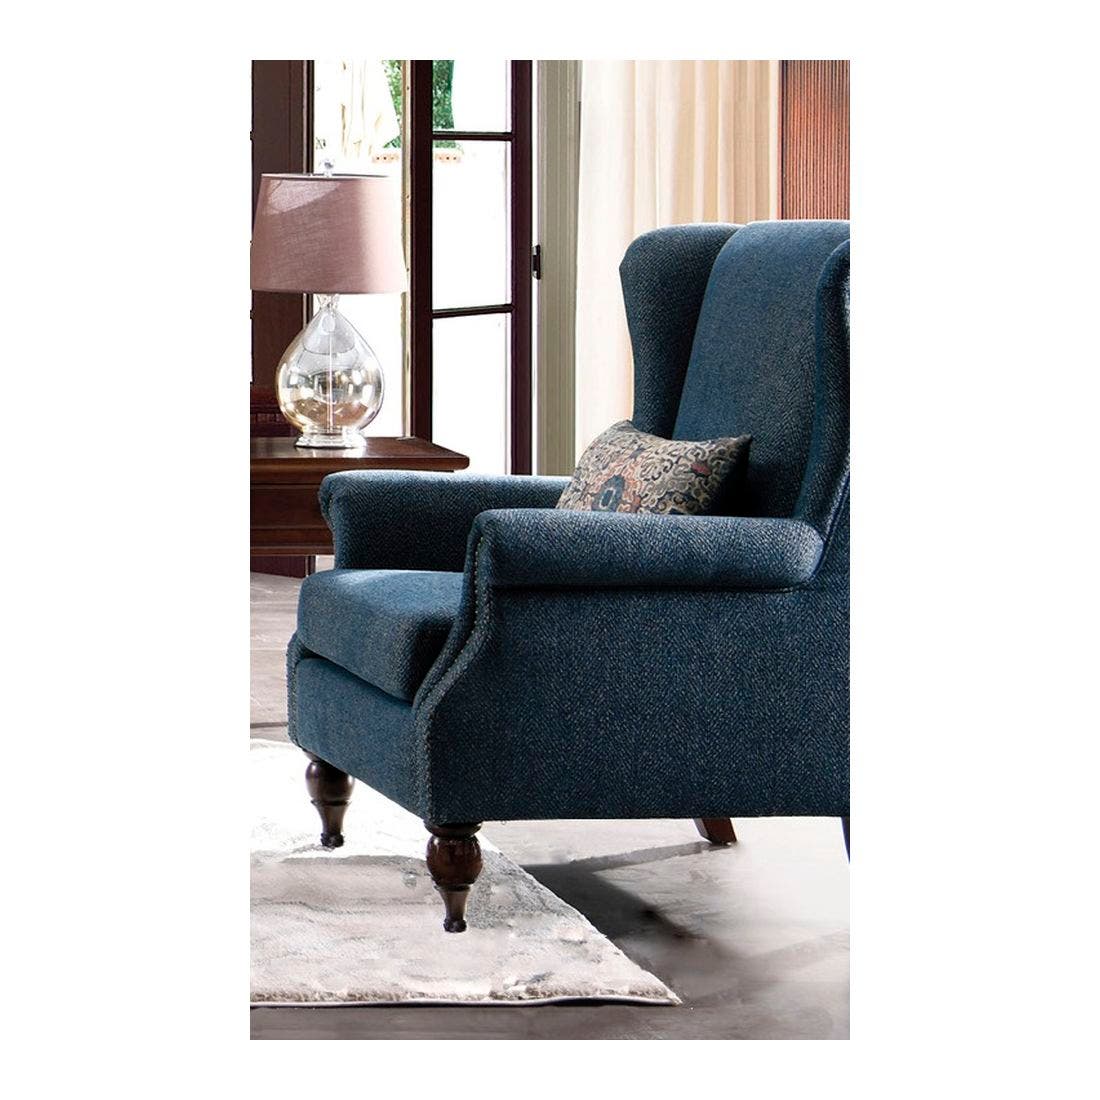 19146496-harrison-furniture-sofa-recliner-sofas-01